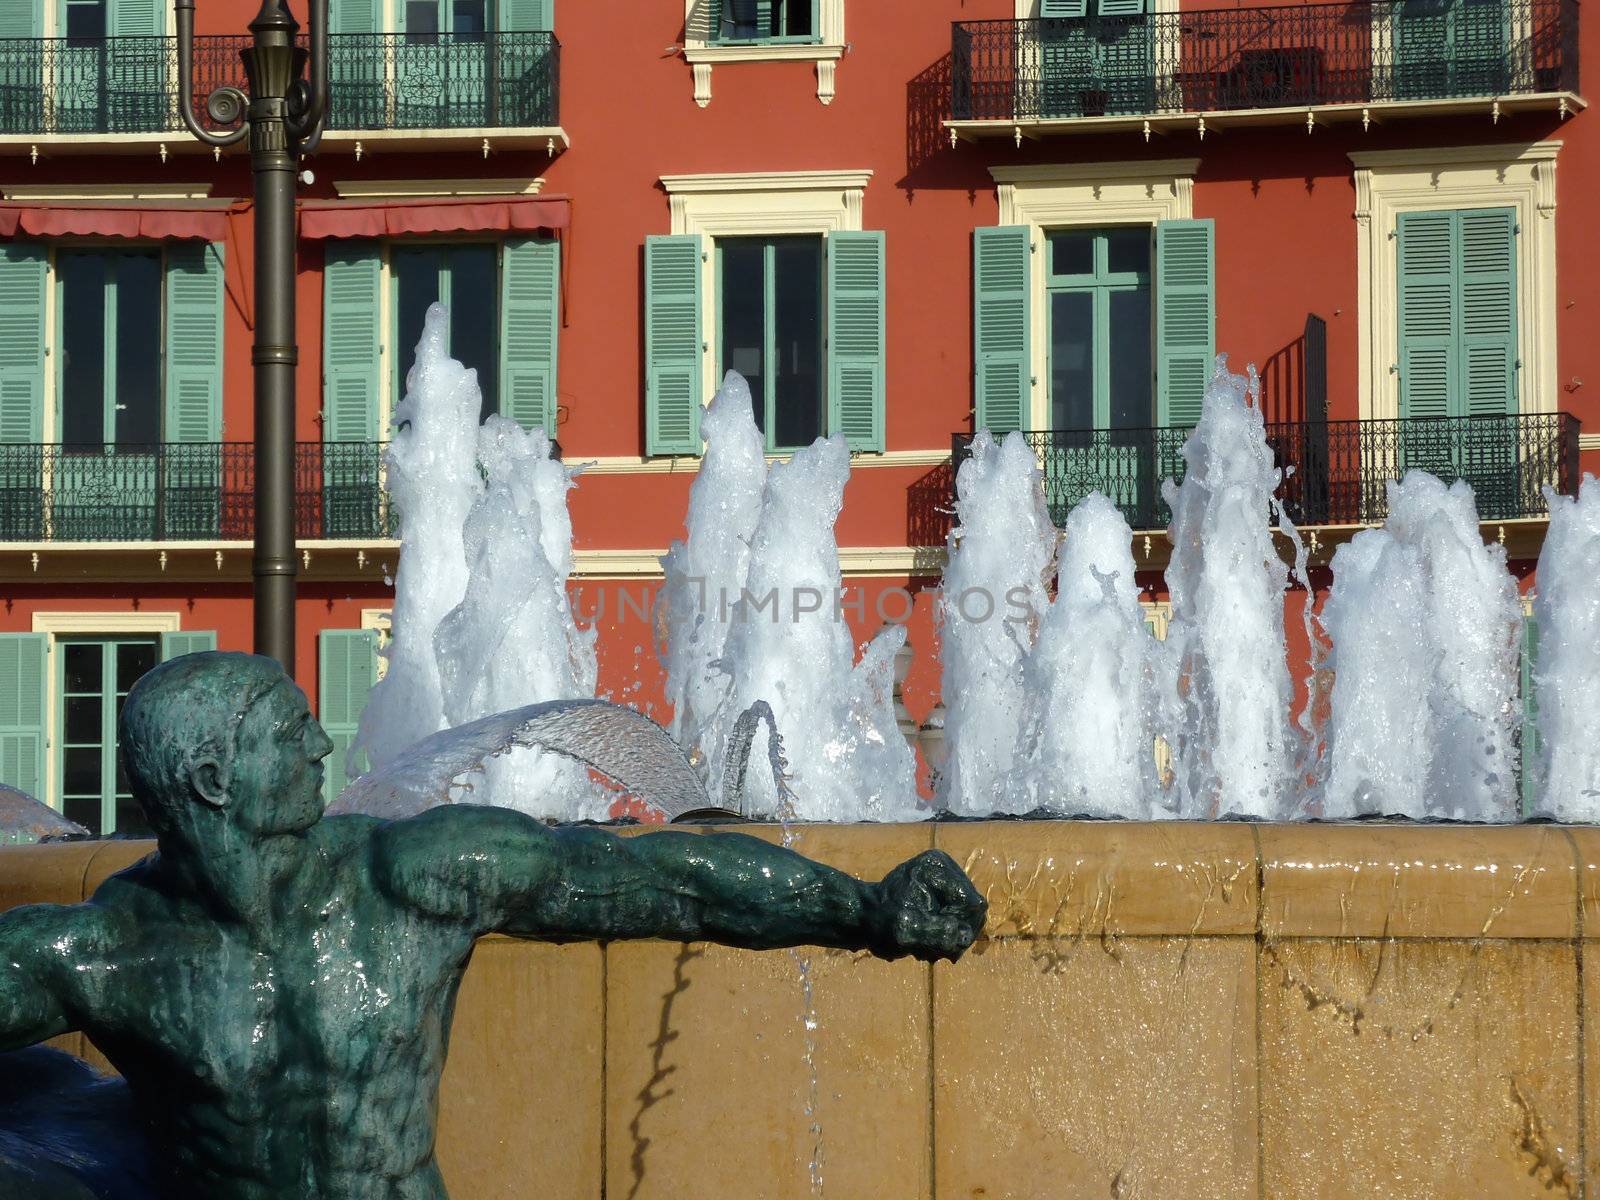 Fountain in Nice by Elenaphotos21